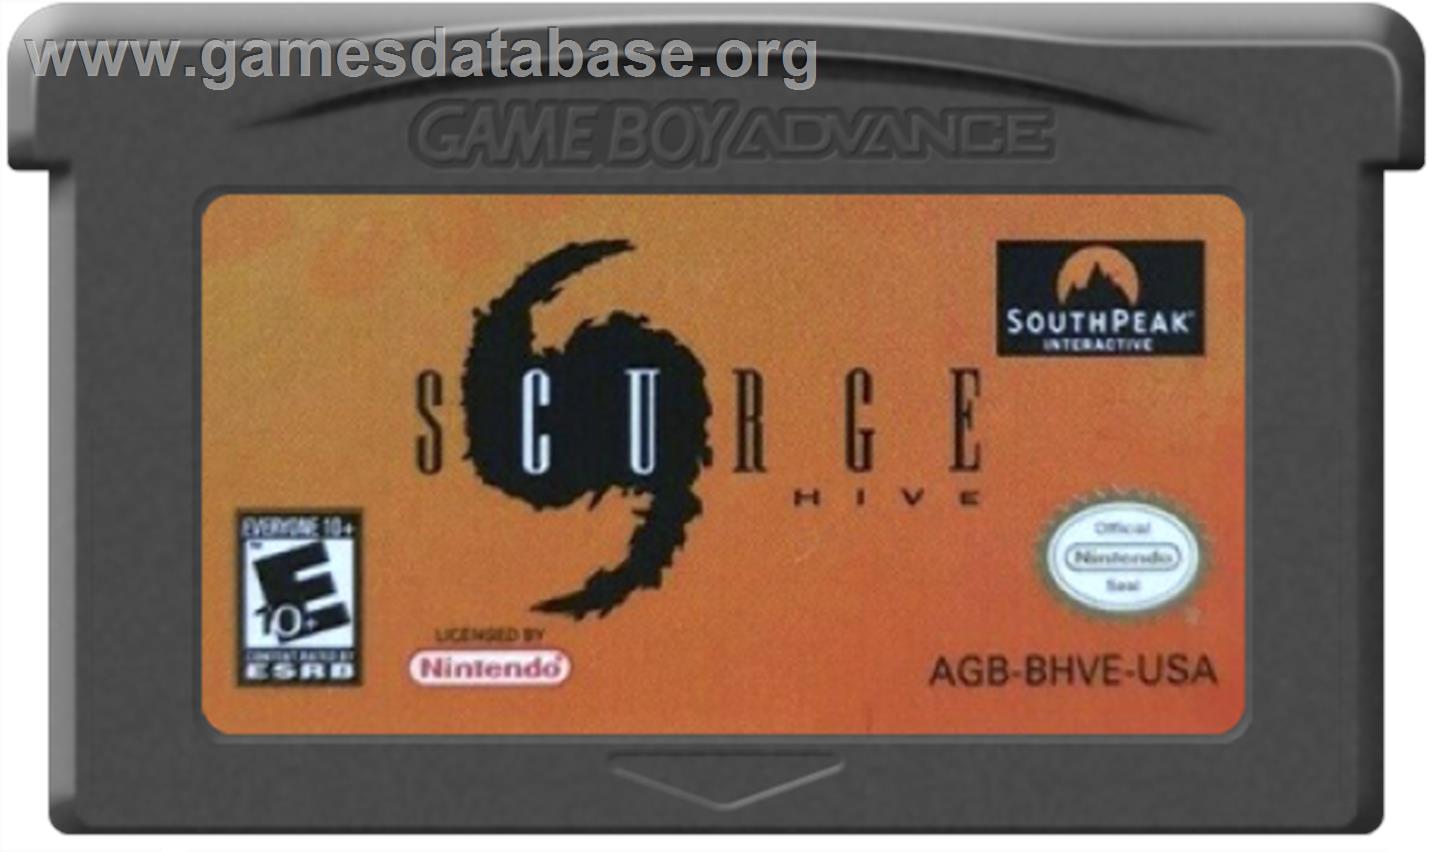 Scurge: Hive - Nintendo Game Boy Advance - Artwork - Cartridge